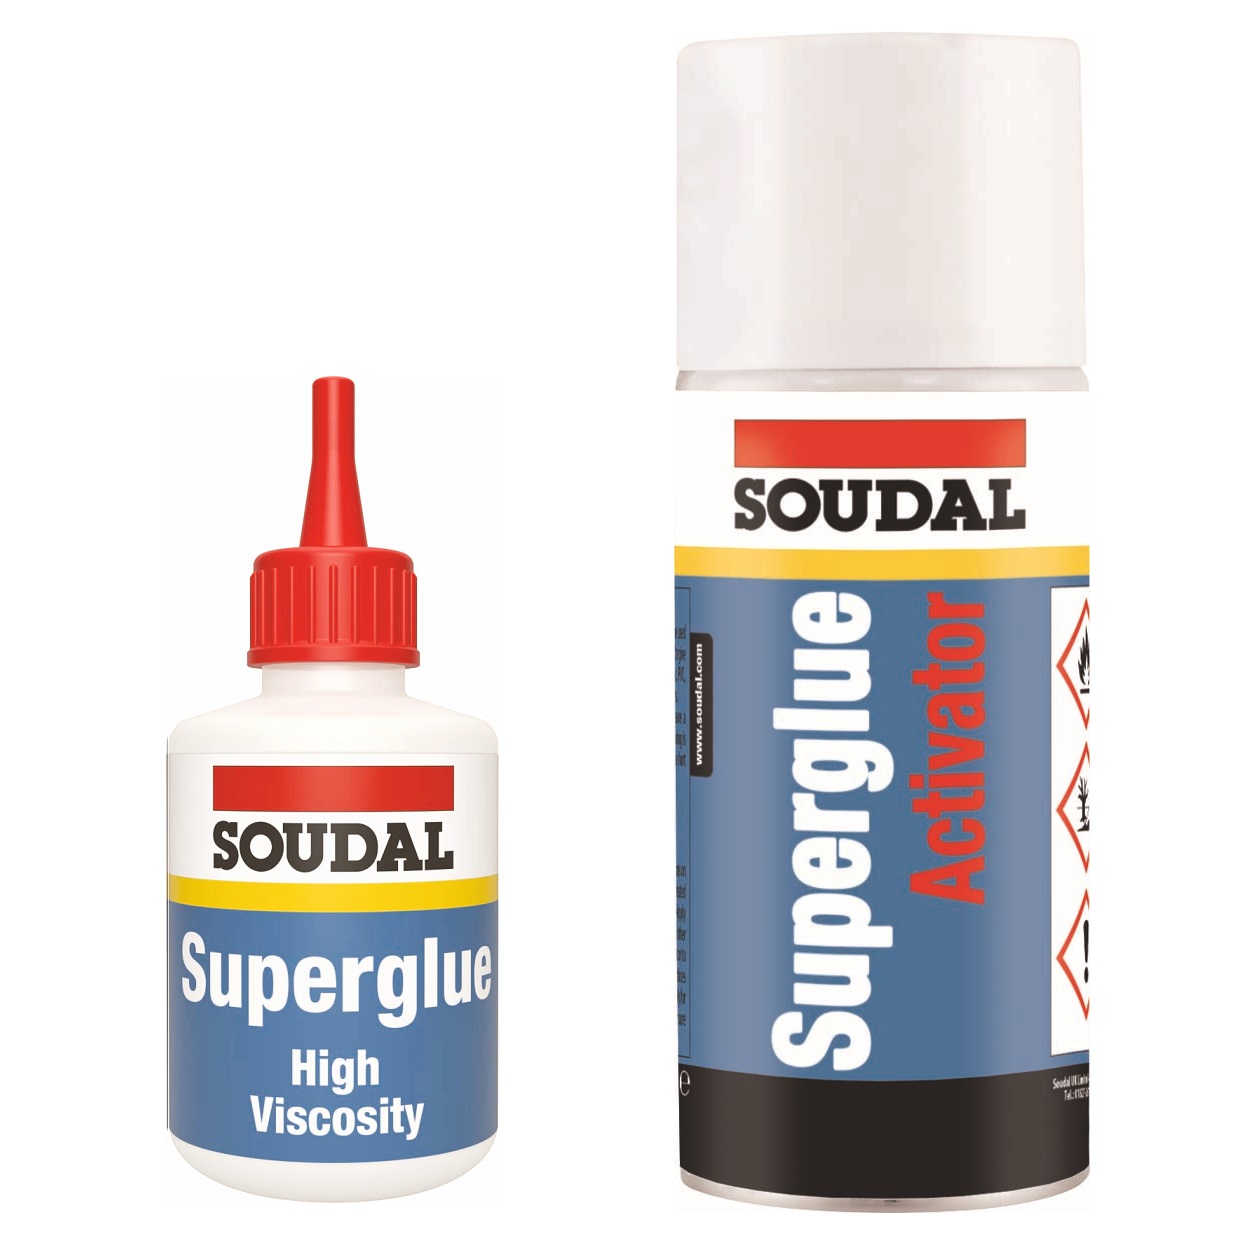 Soudal Superglue HV - High Viscosity